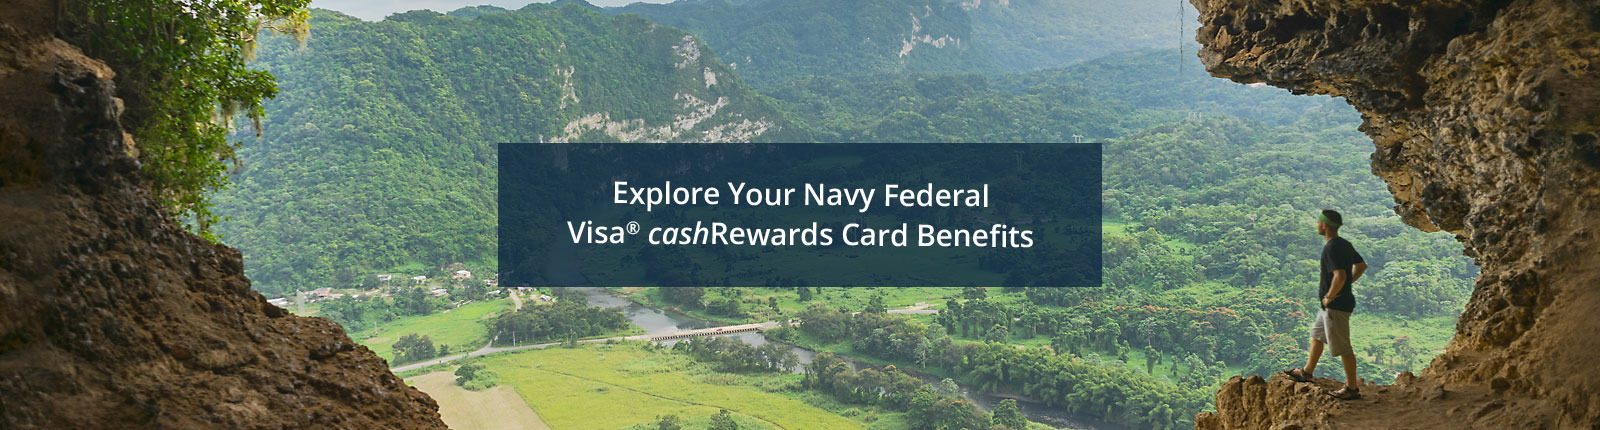 Explore Your Navy Federal Visa® cashRewards Card Benefits